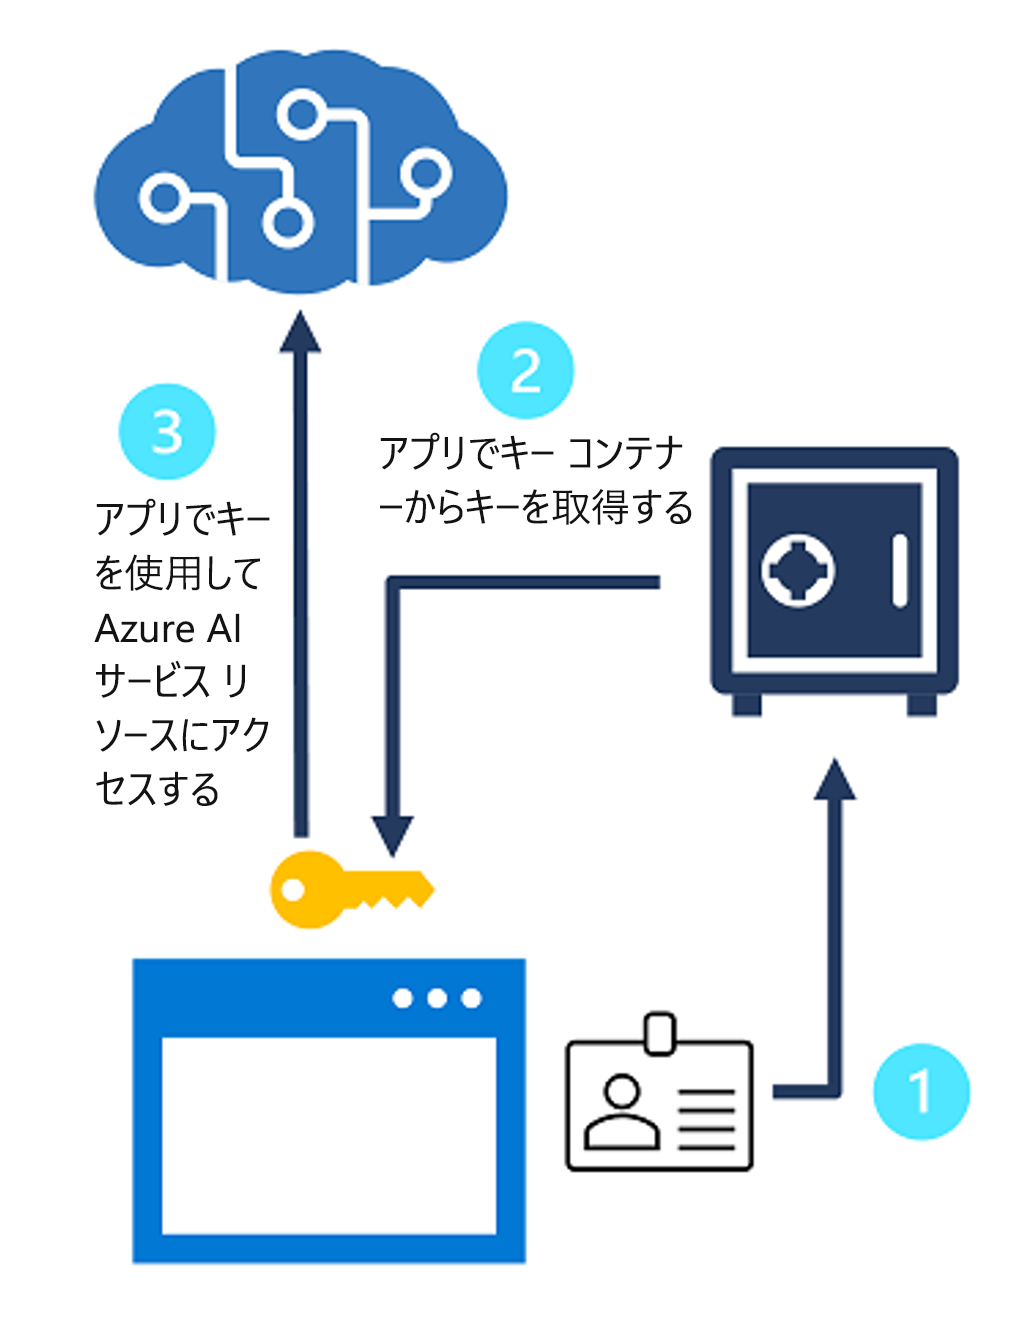 Diagram showing Azure AI services credentials retrieved from Azure Key Vault.